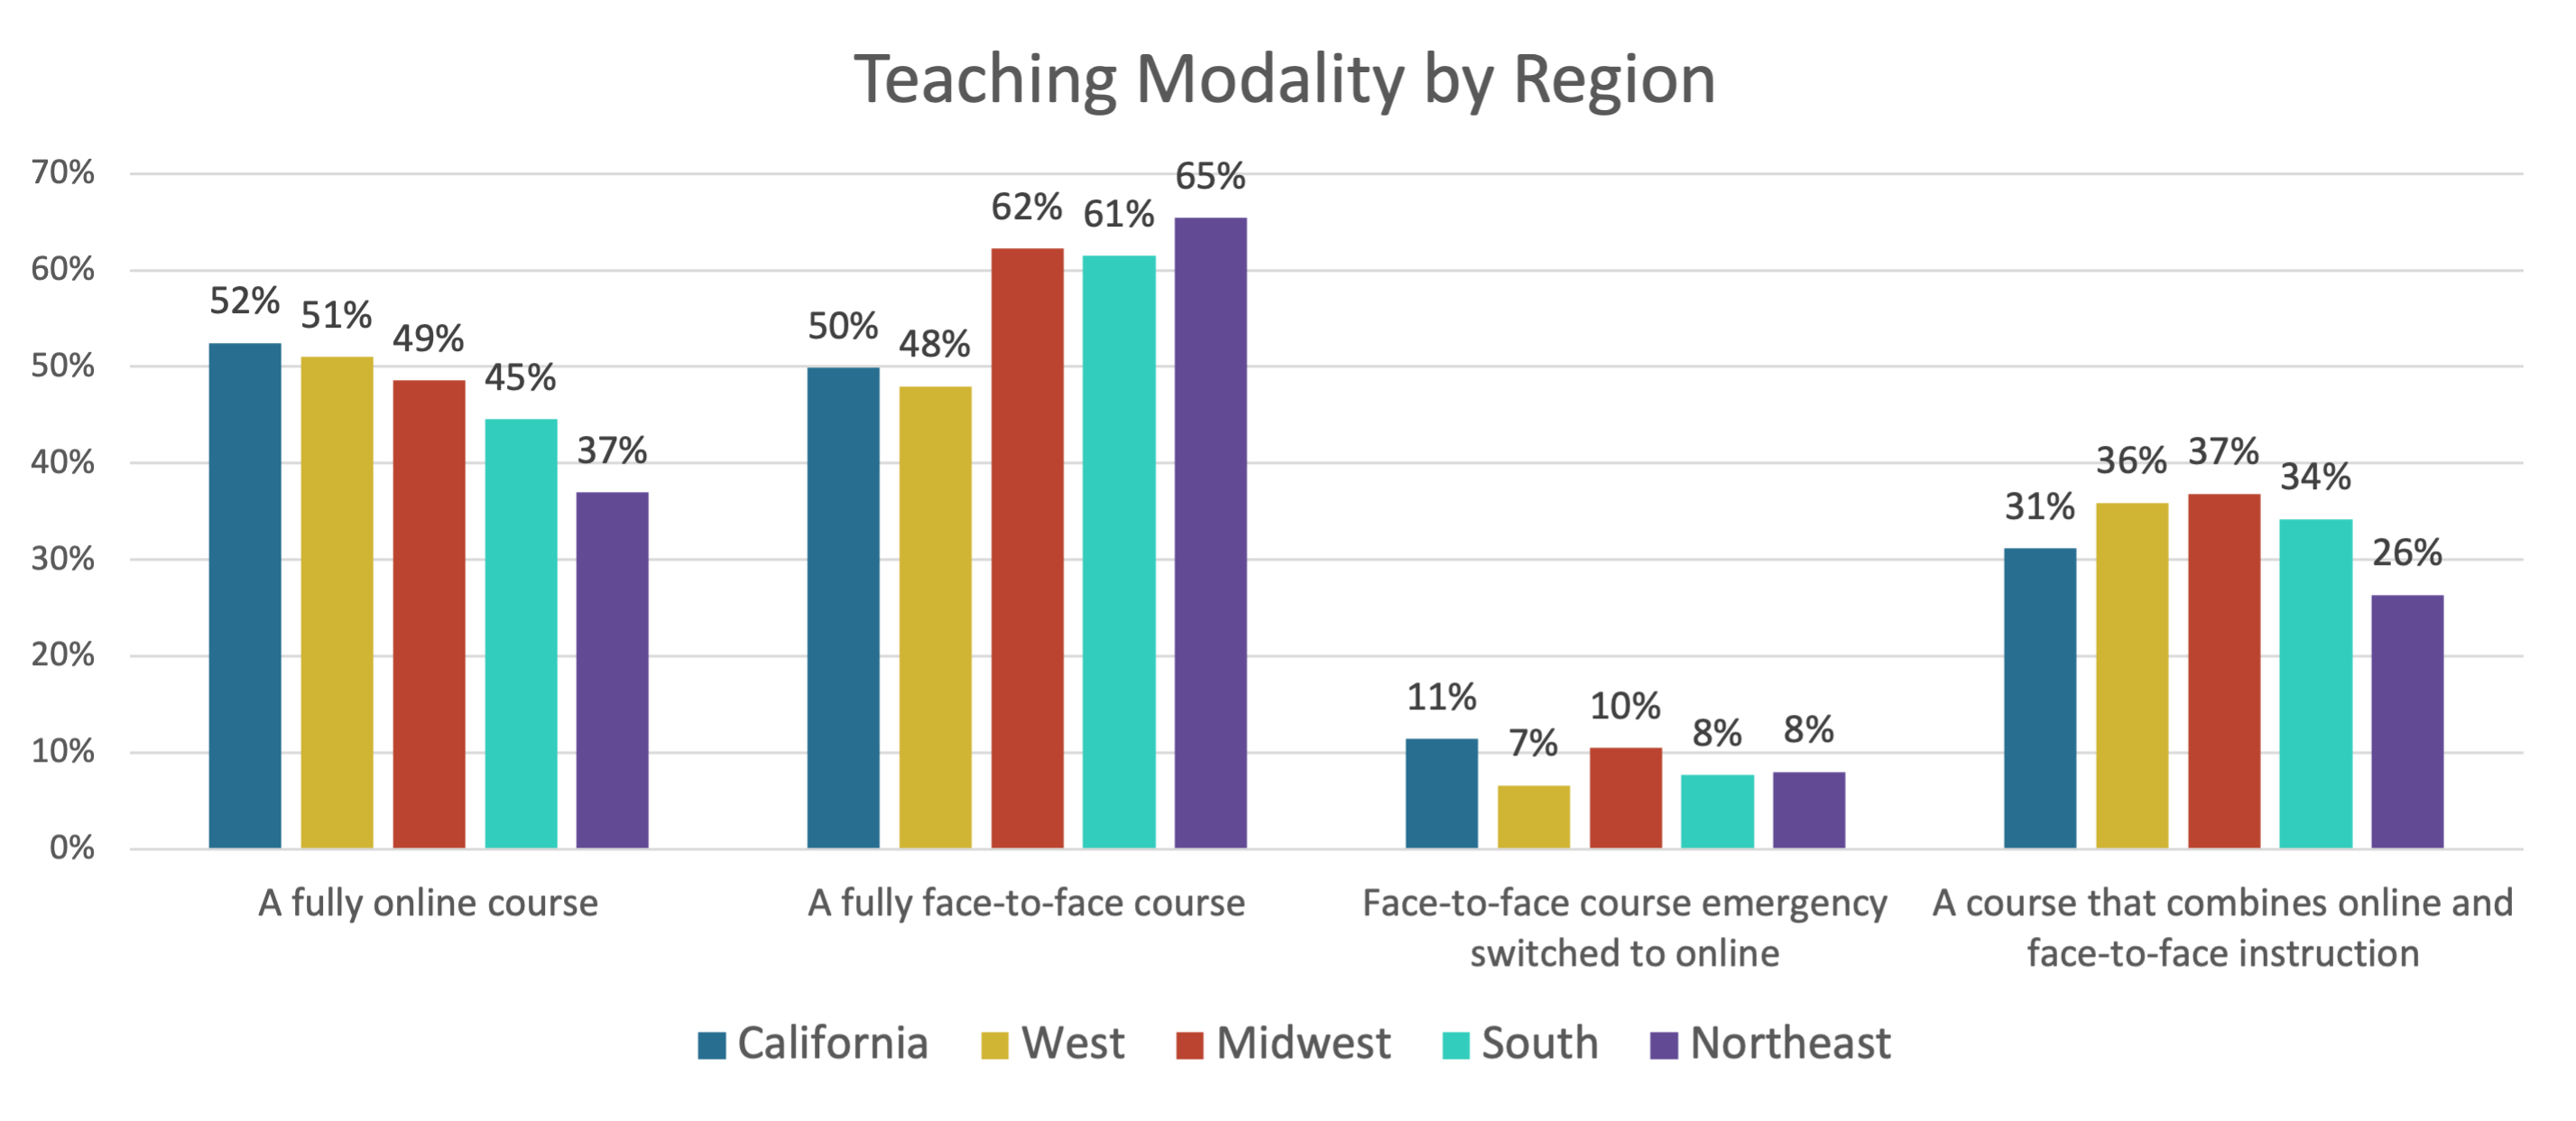 Bar chart comparing teaching modality by region